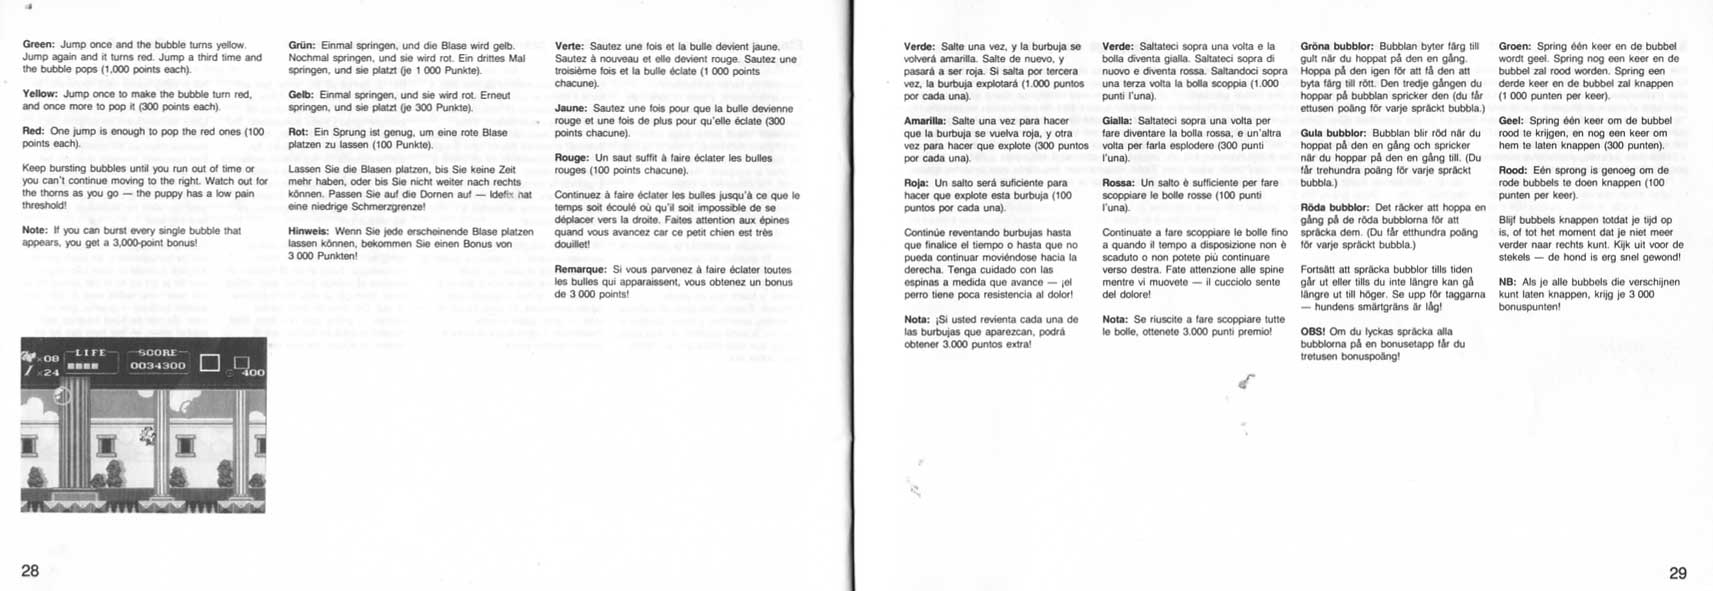 Astérix Jeux Master System Notice page 28-29